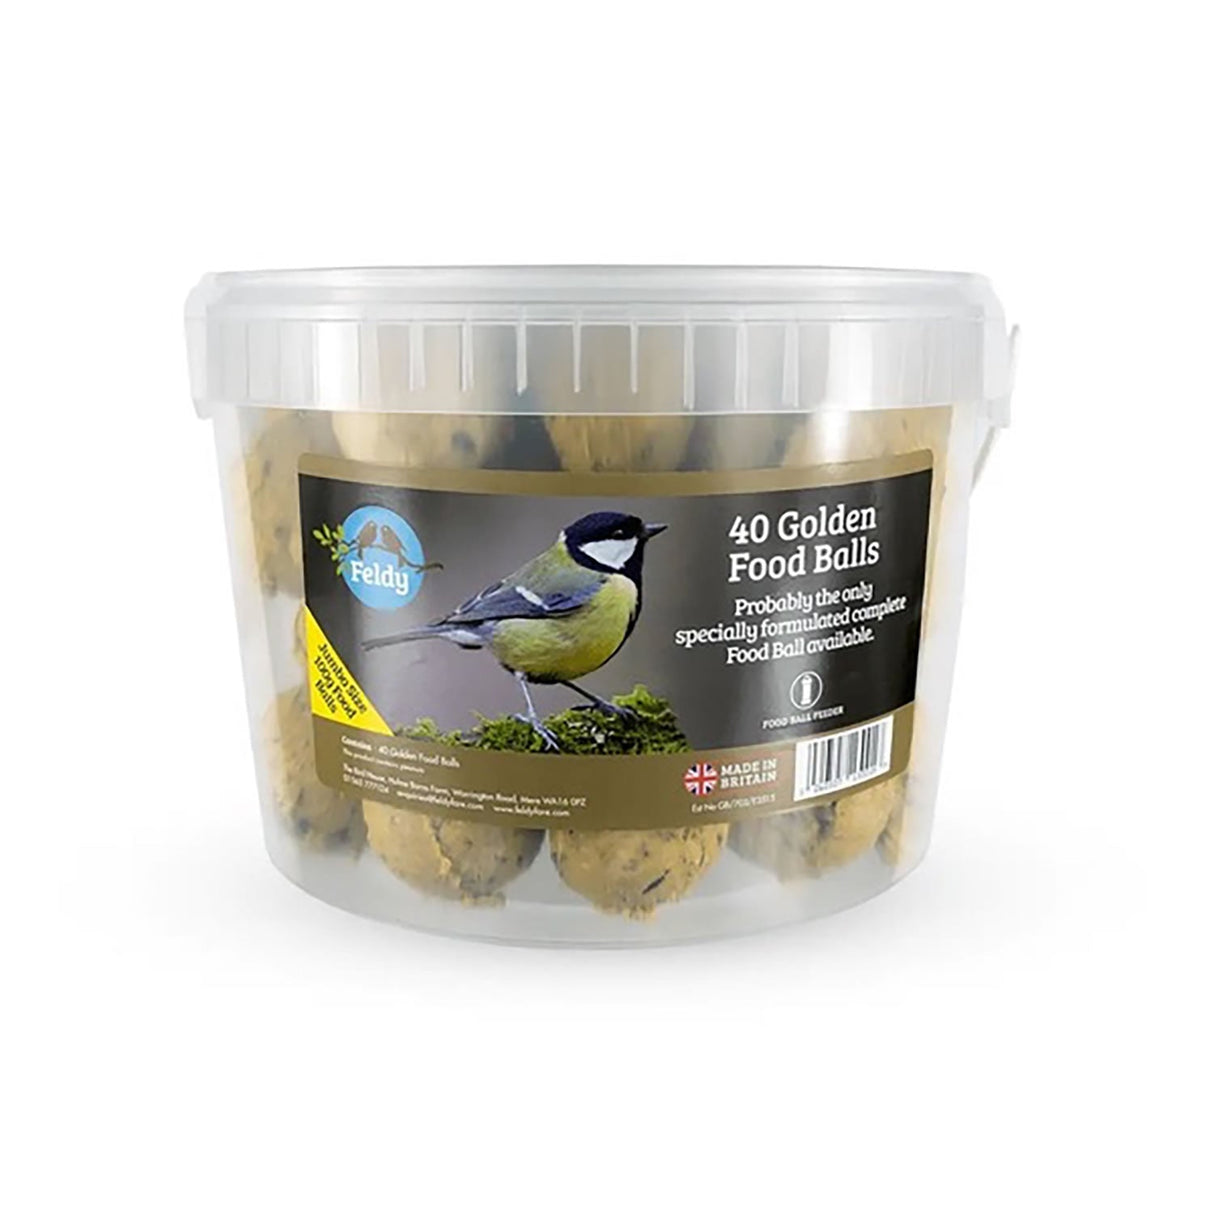 Feldy Golden Food Balls Wild Bird Food Barnstaple Equestrian Supplies